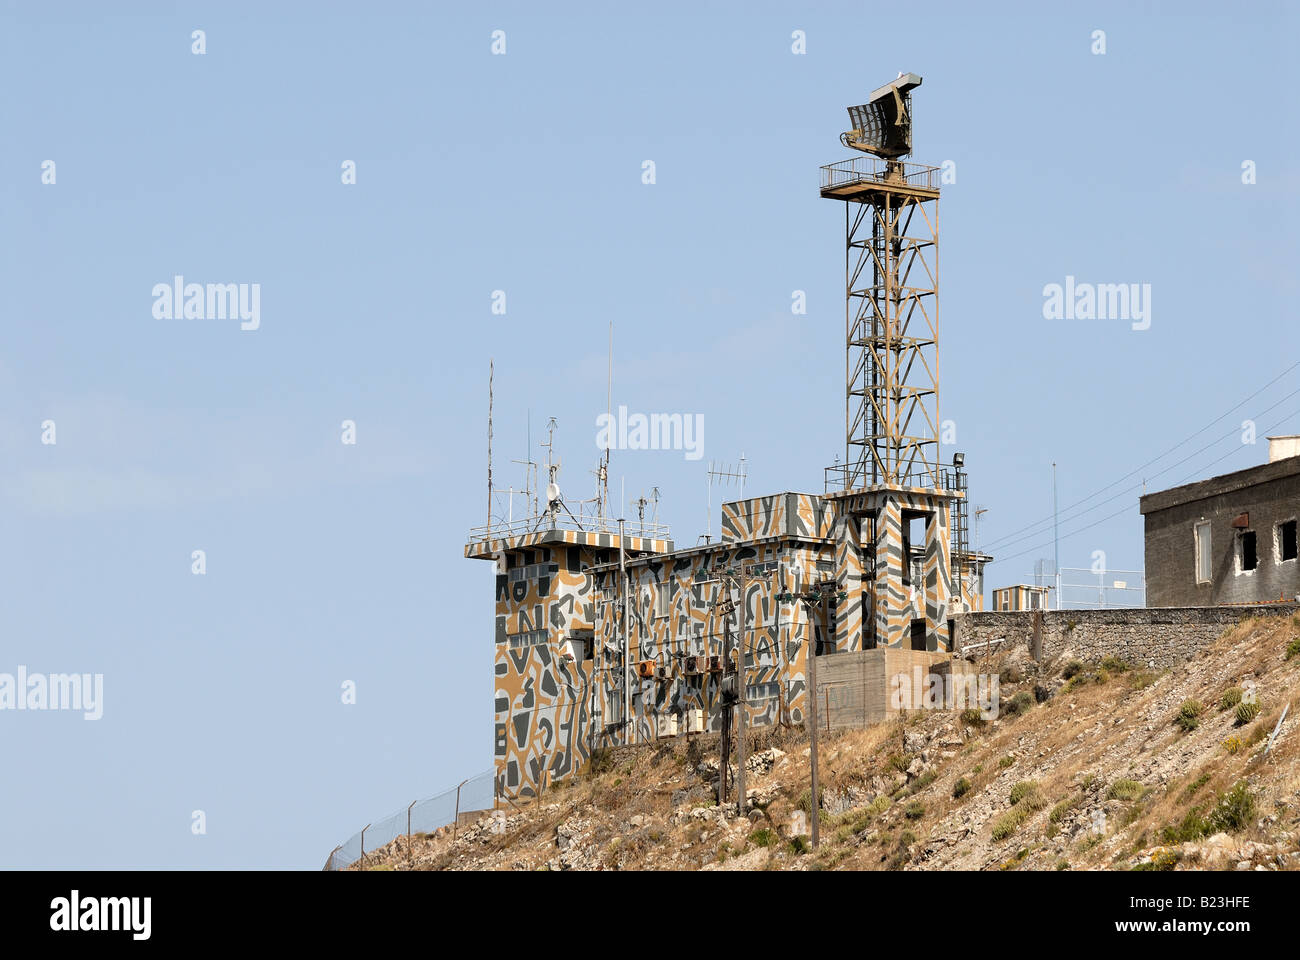 Military tower with radar and antennas Stock Photo